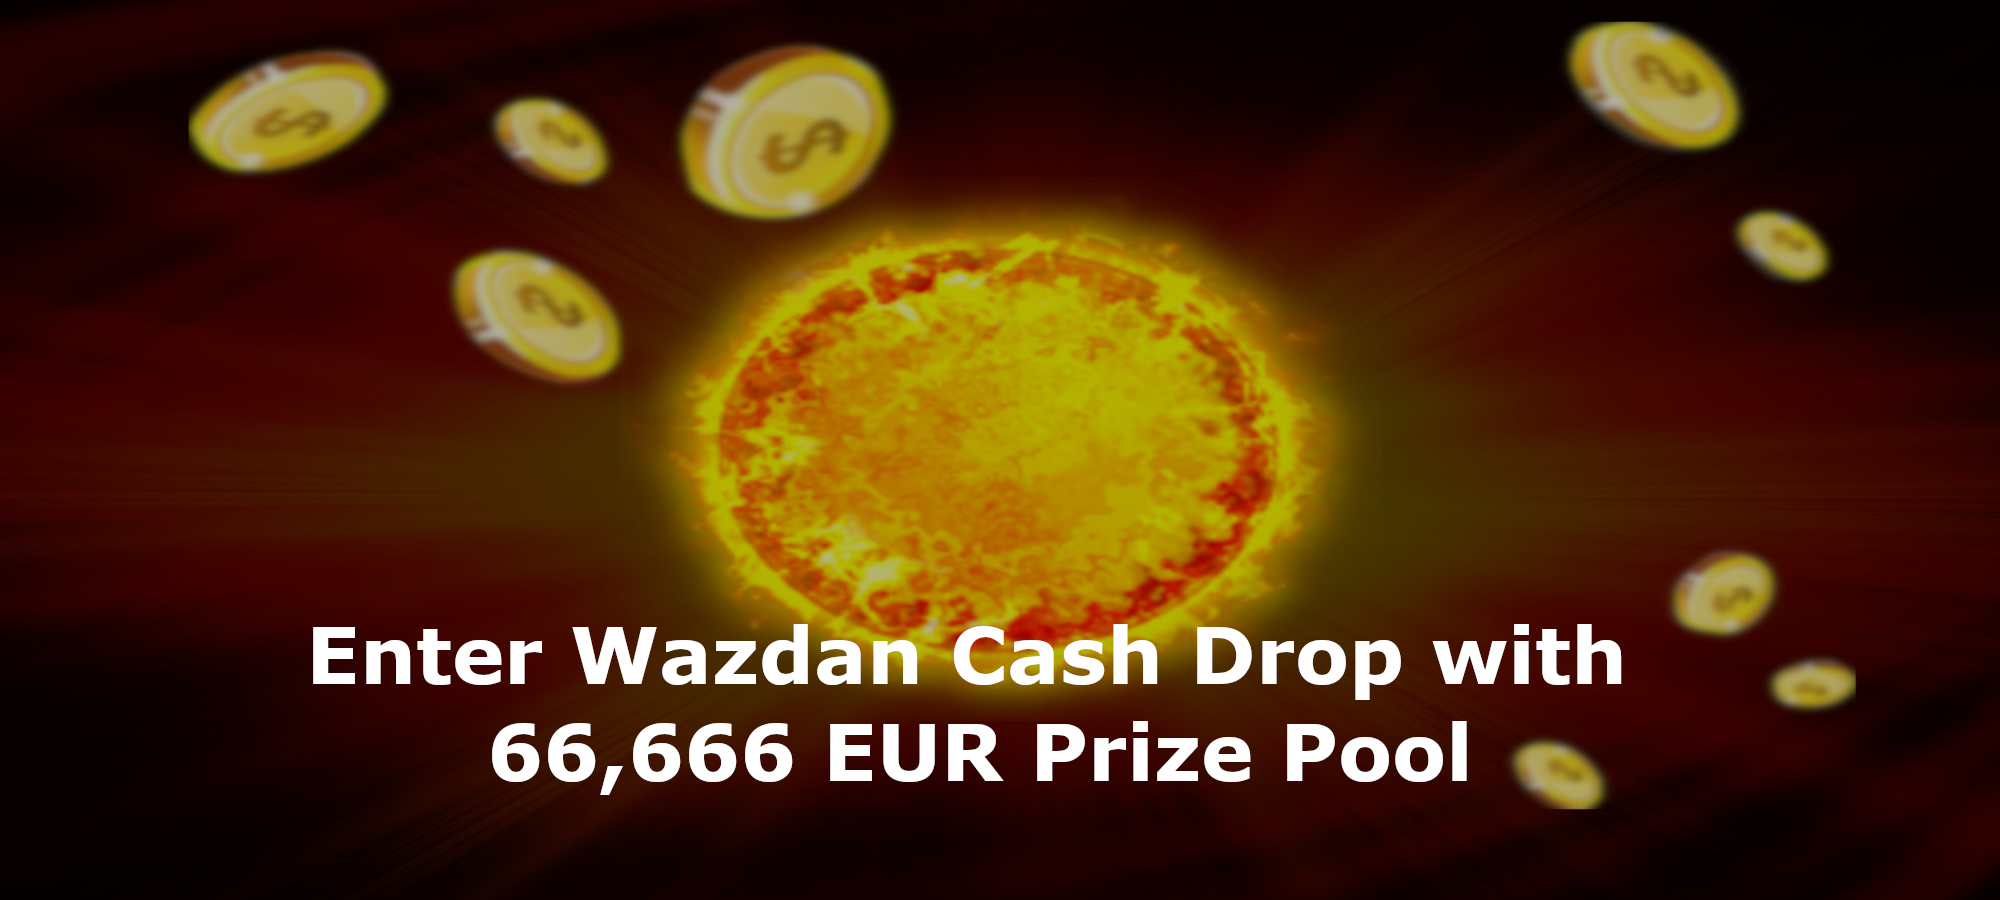 Enter Wazdan Cash Drop with 66,666 EUR Prize Pool